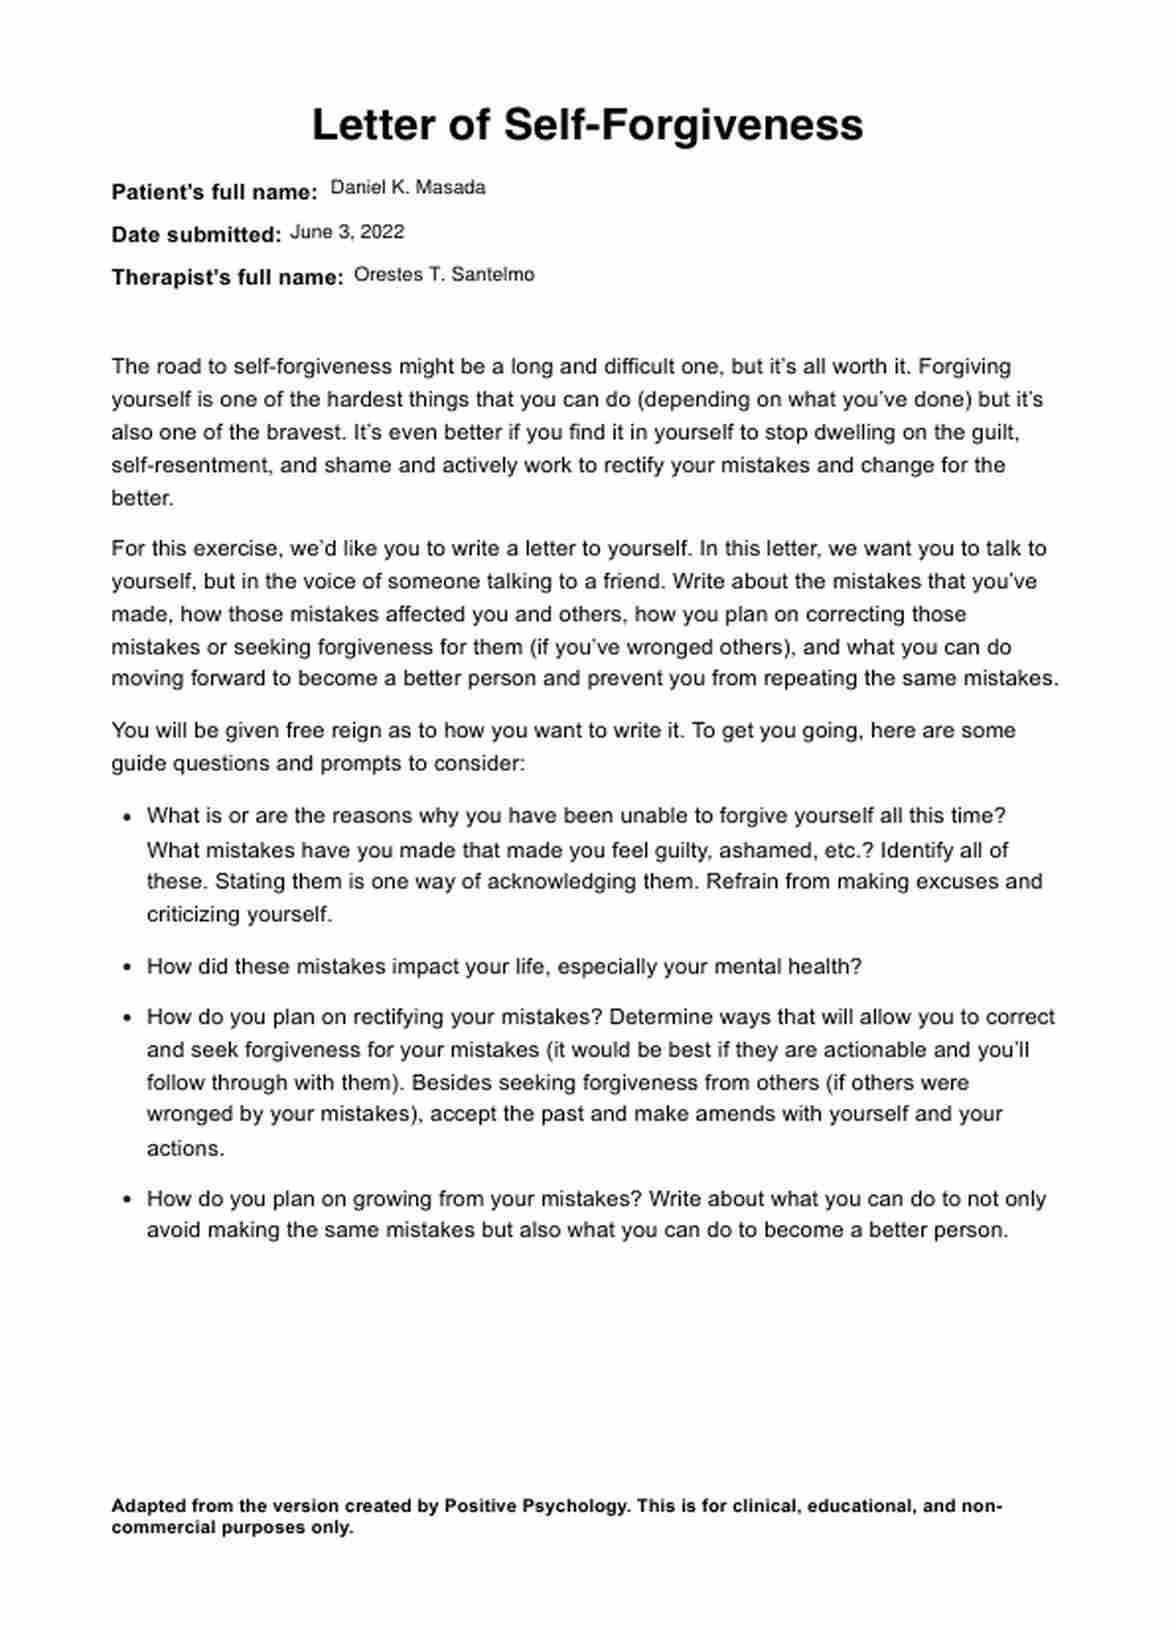 Letter of Self-Forgiveness Worksheet PDF Example